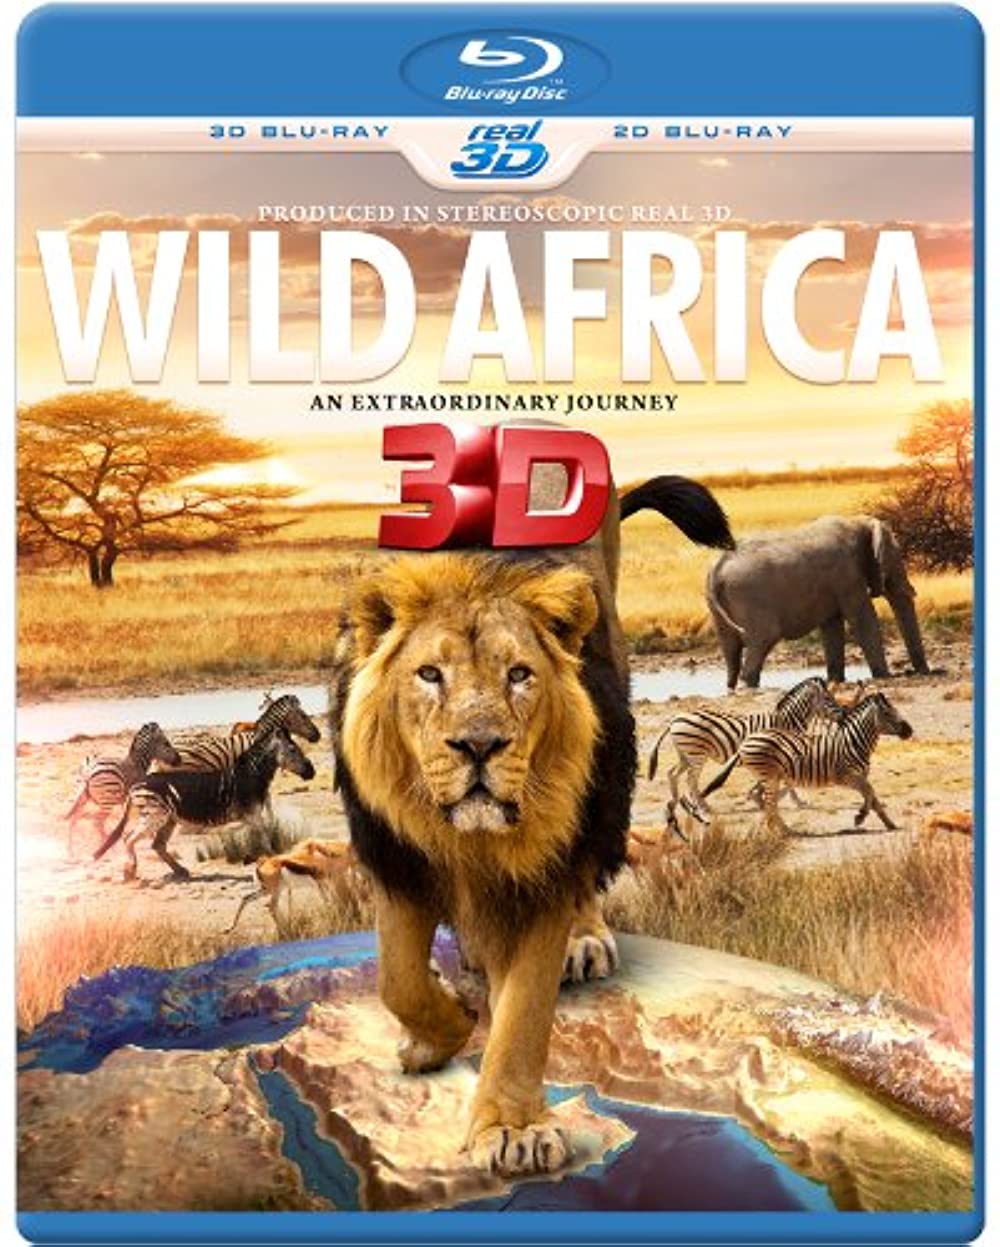 Filmbeschreibung zu Wild Africa 3D